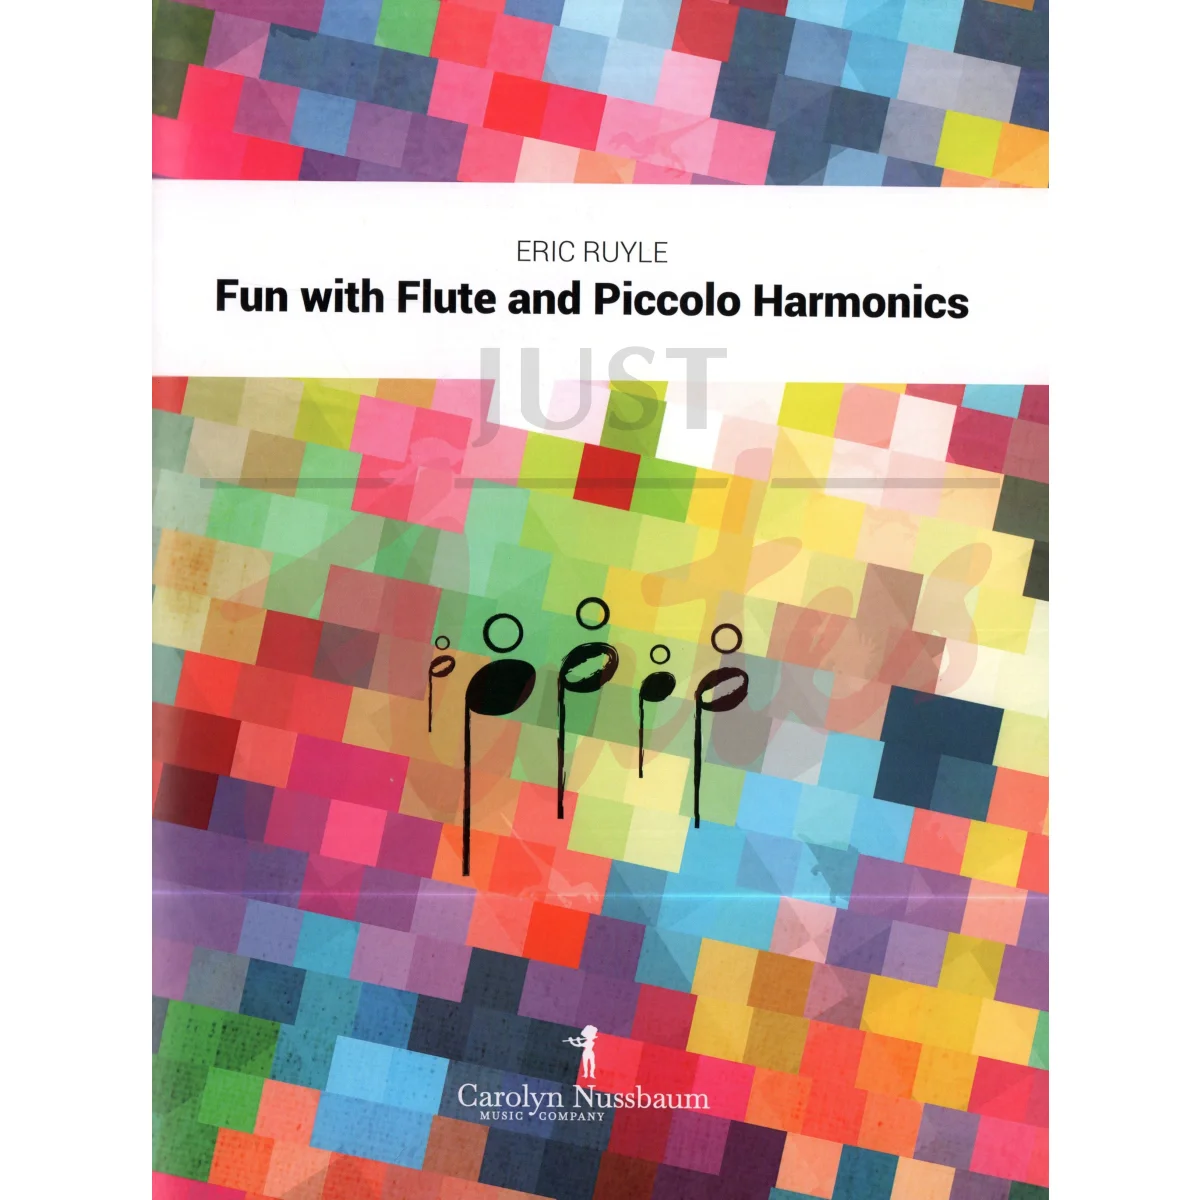 Fun with Flute and Piccolo Harmonics